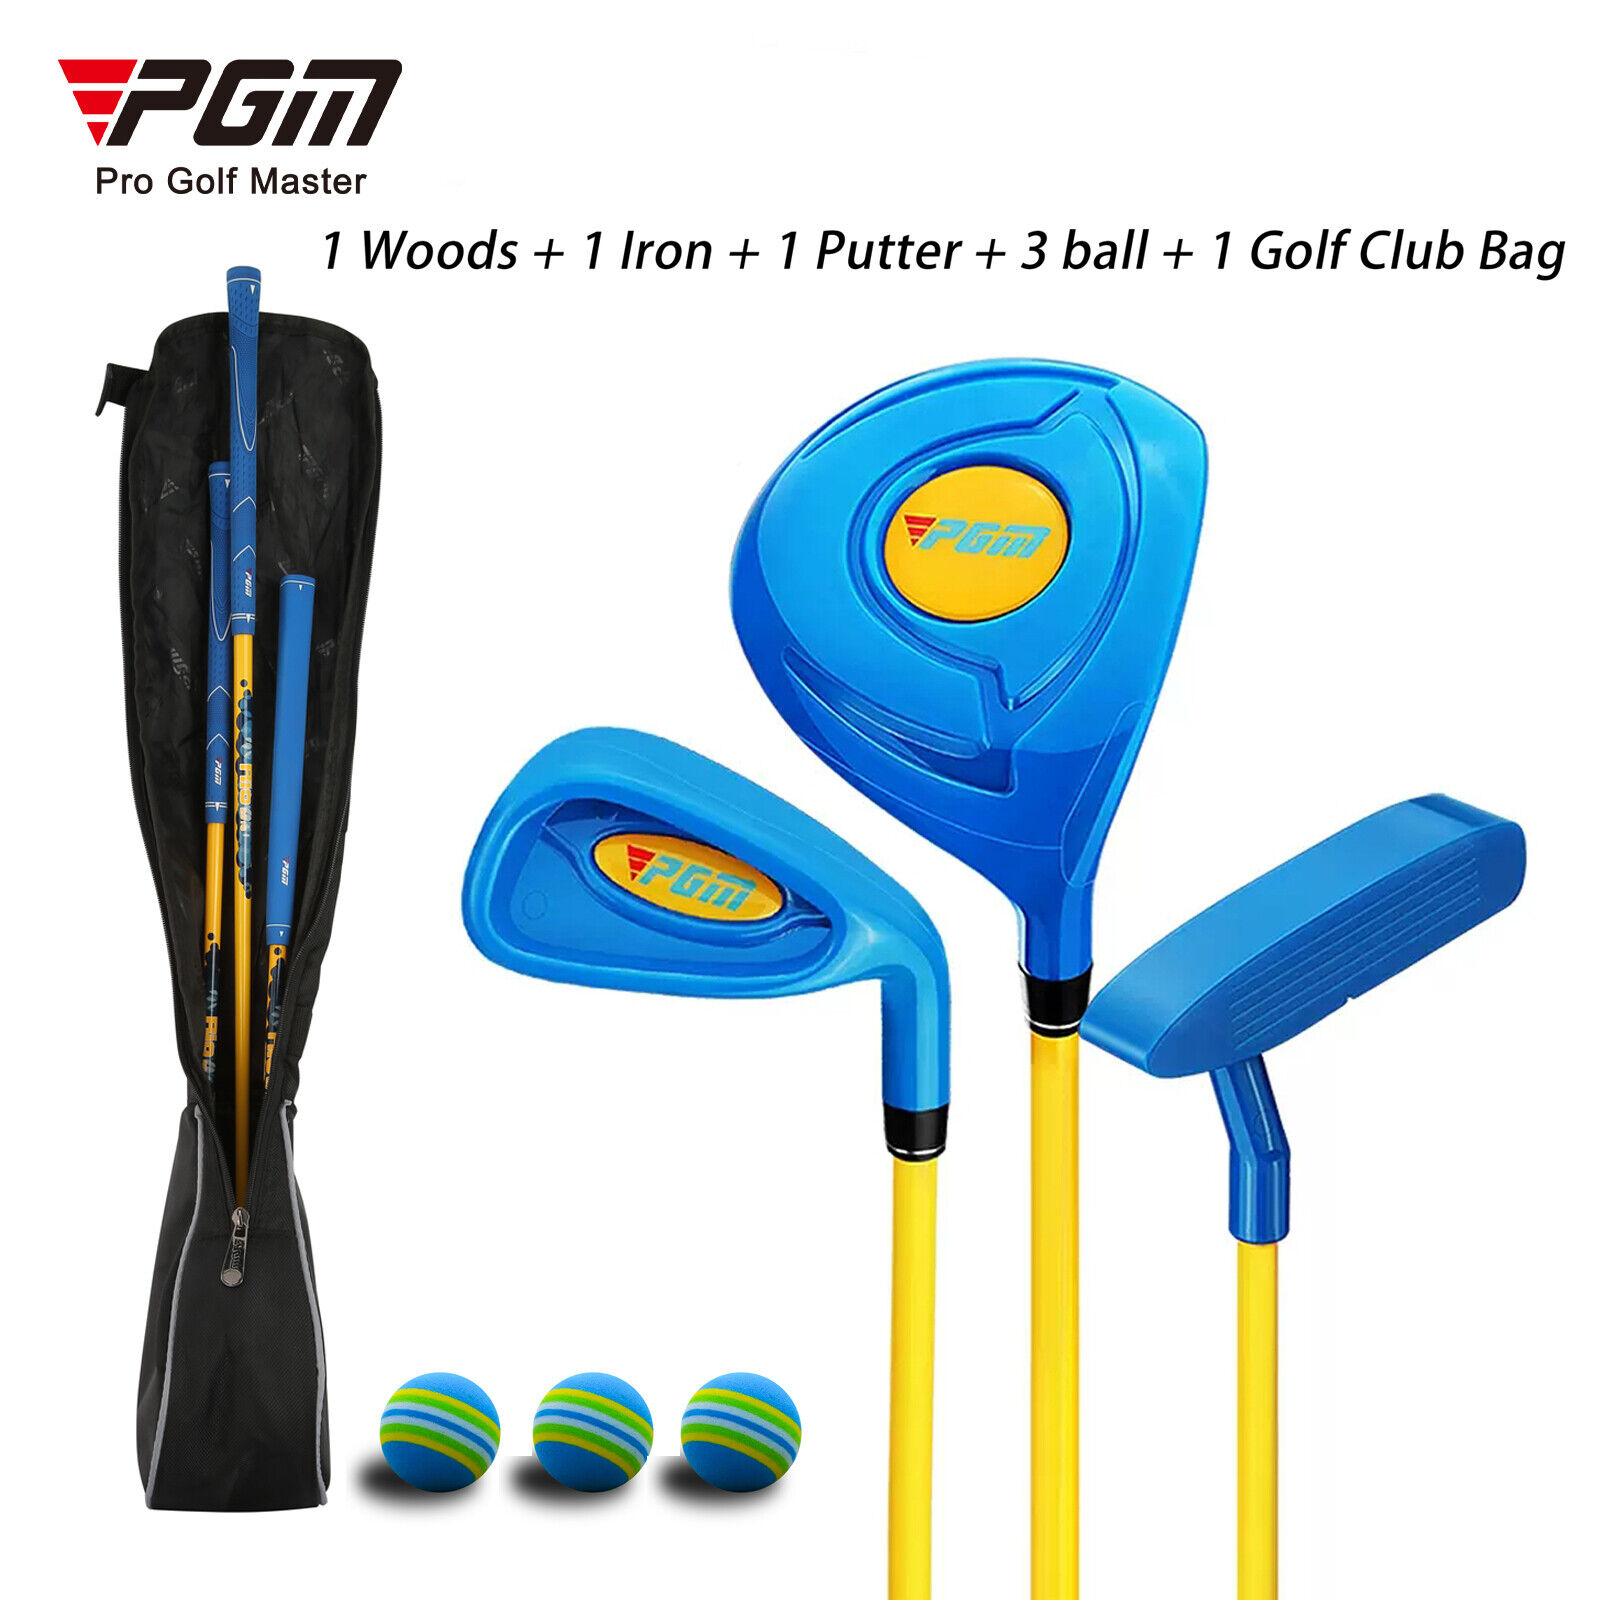 PGM Children\'s Golf Club Set Includes Wood, Iron,Putter Clubs,golf bag and balls